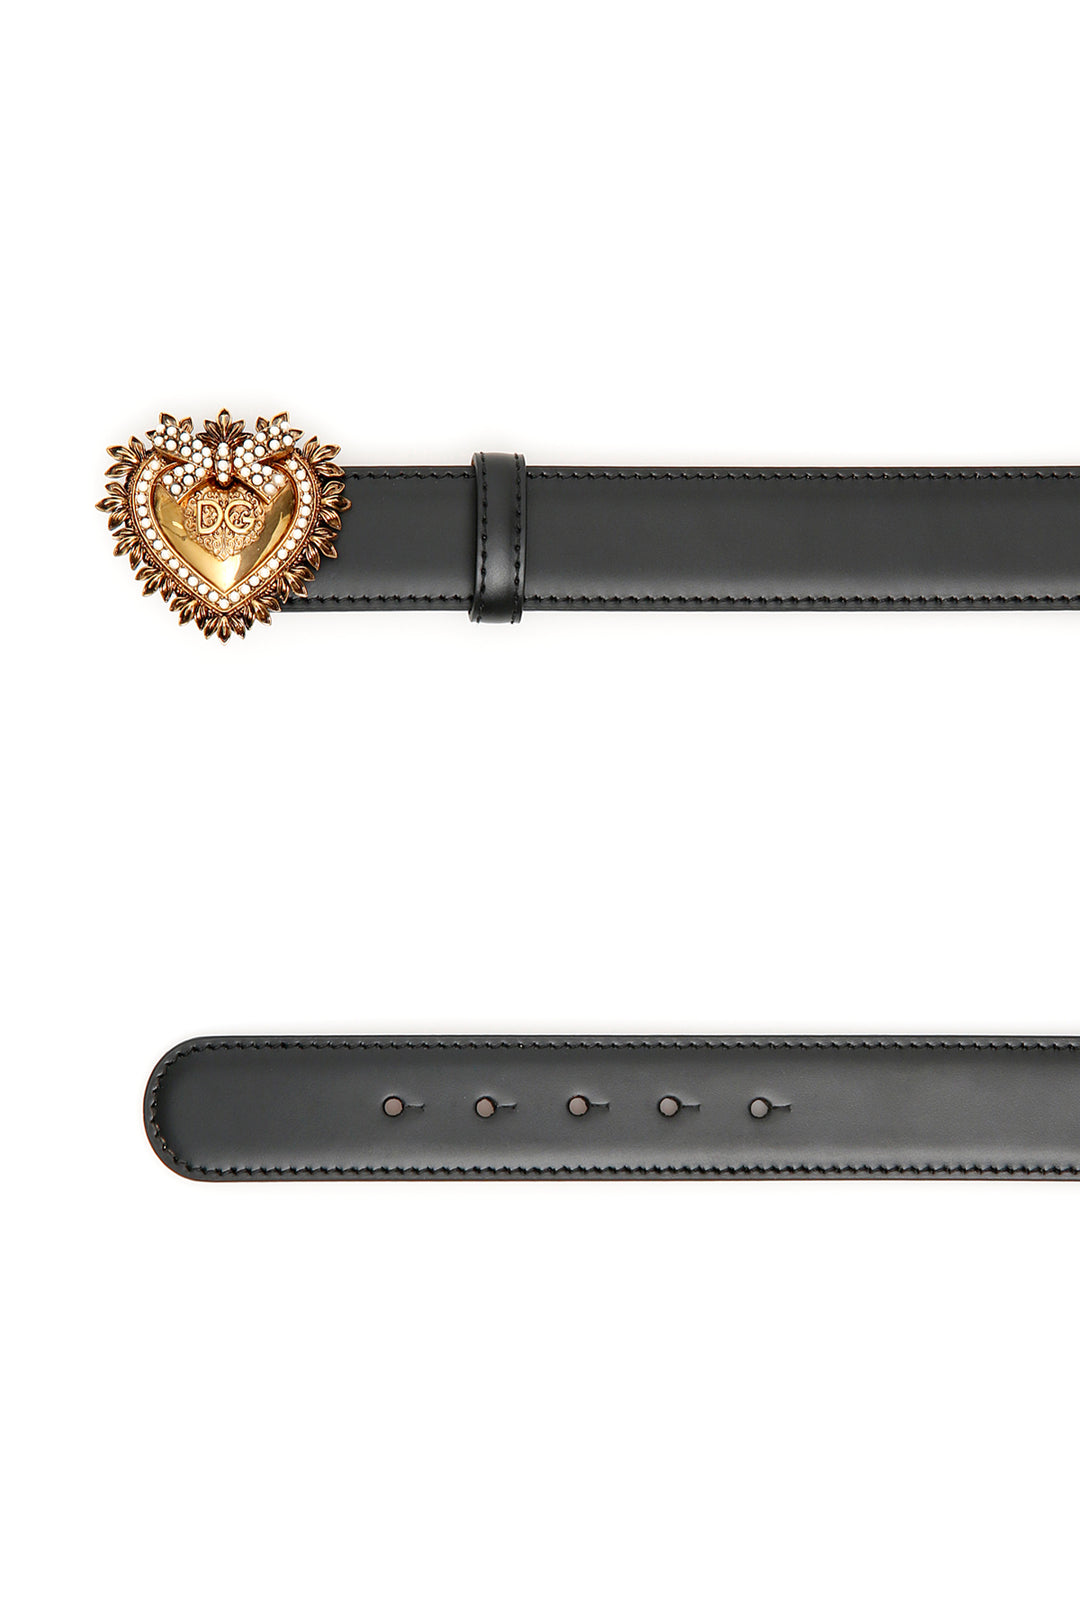 Dolce & Gabbana Devotion Leather Belt   Black